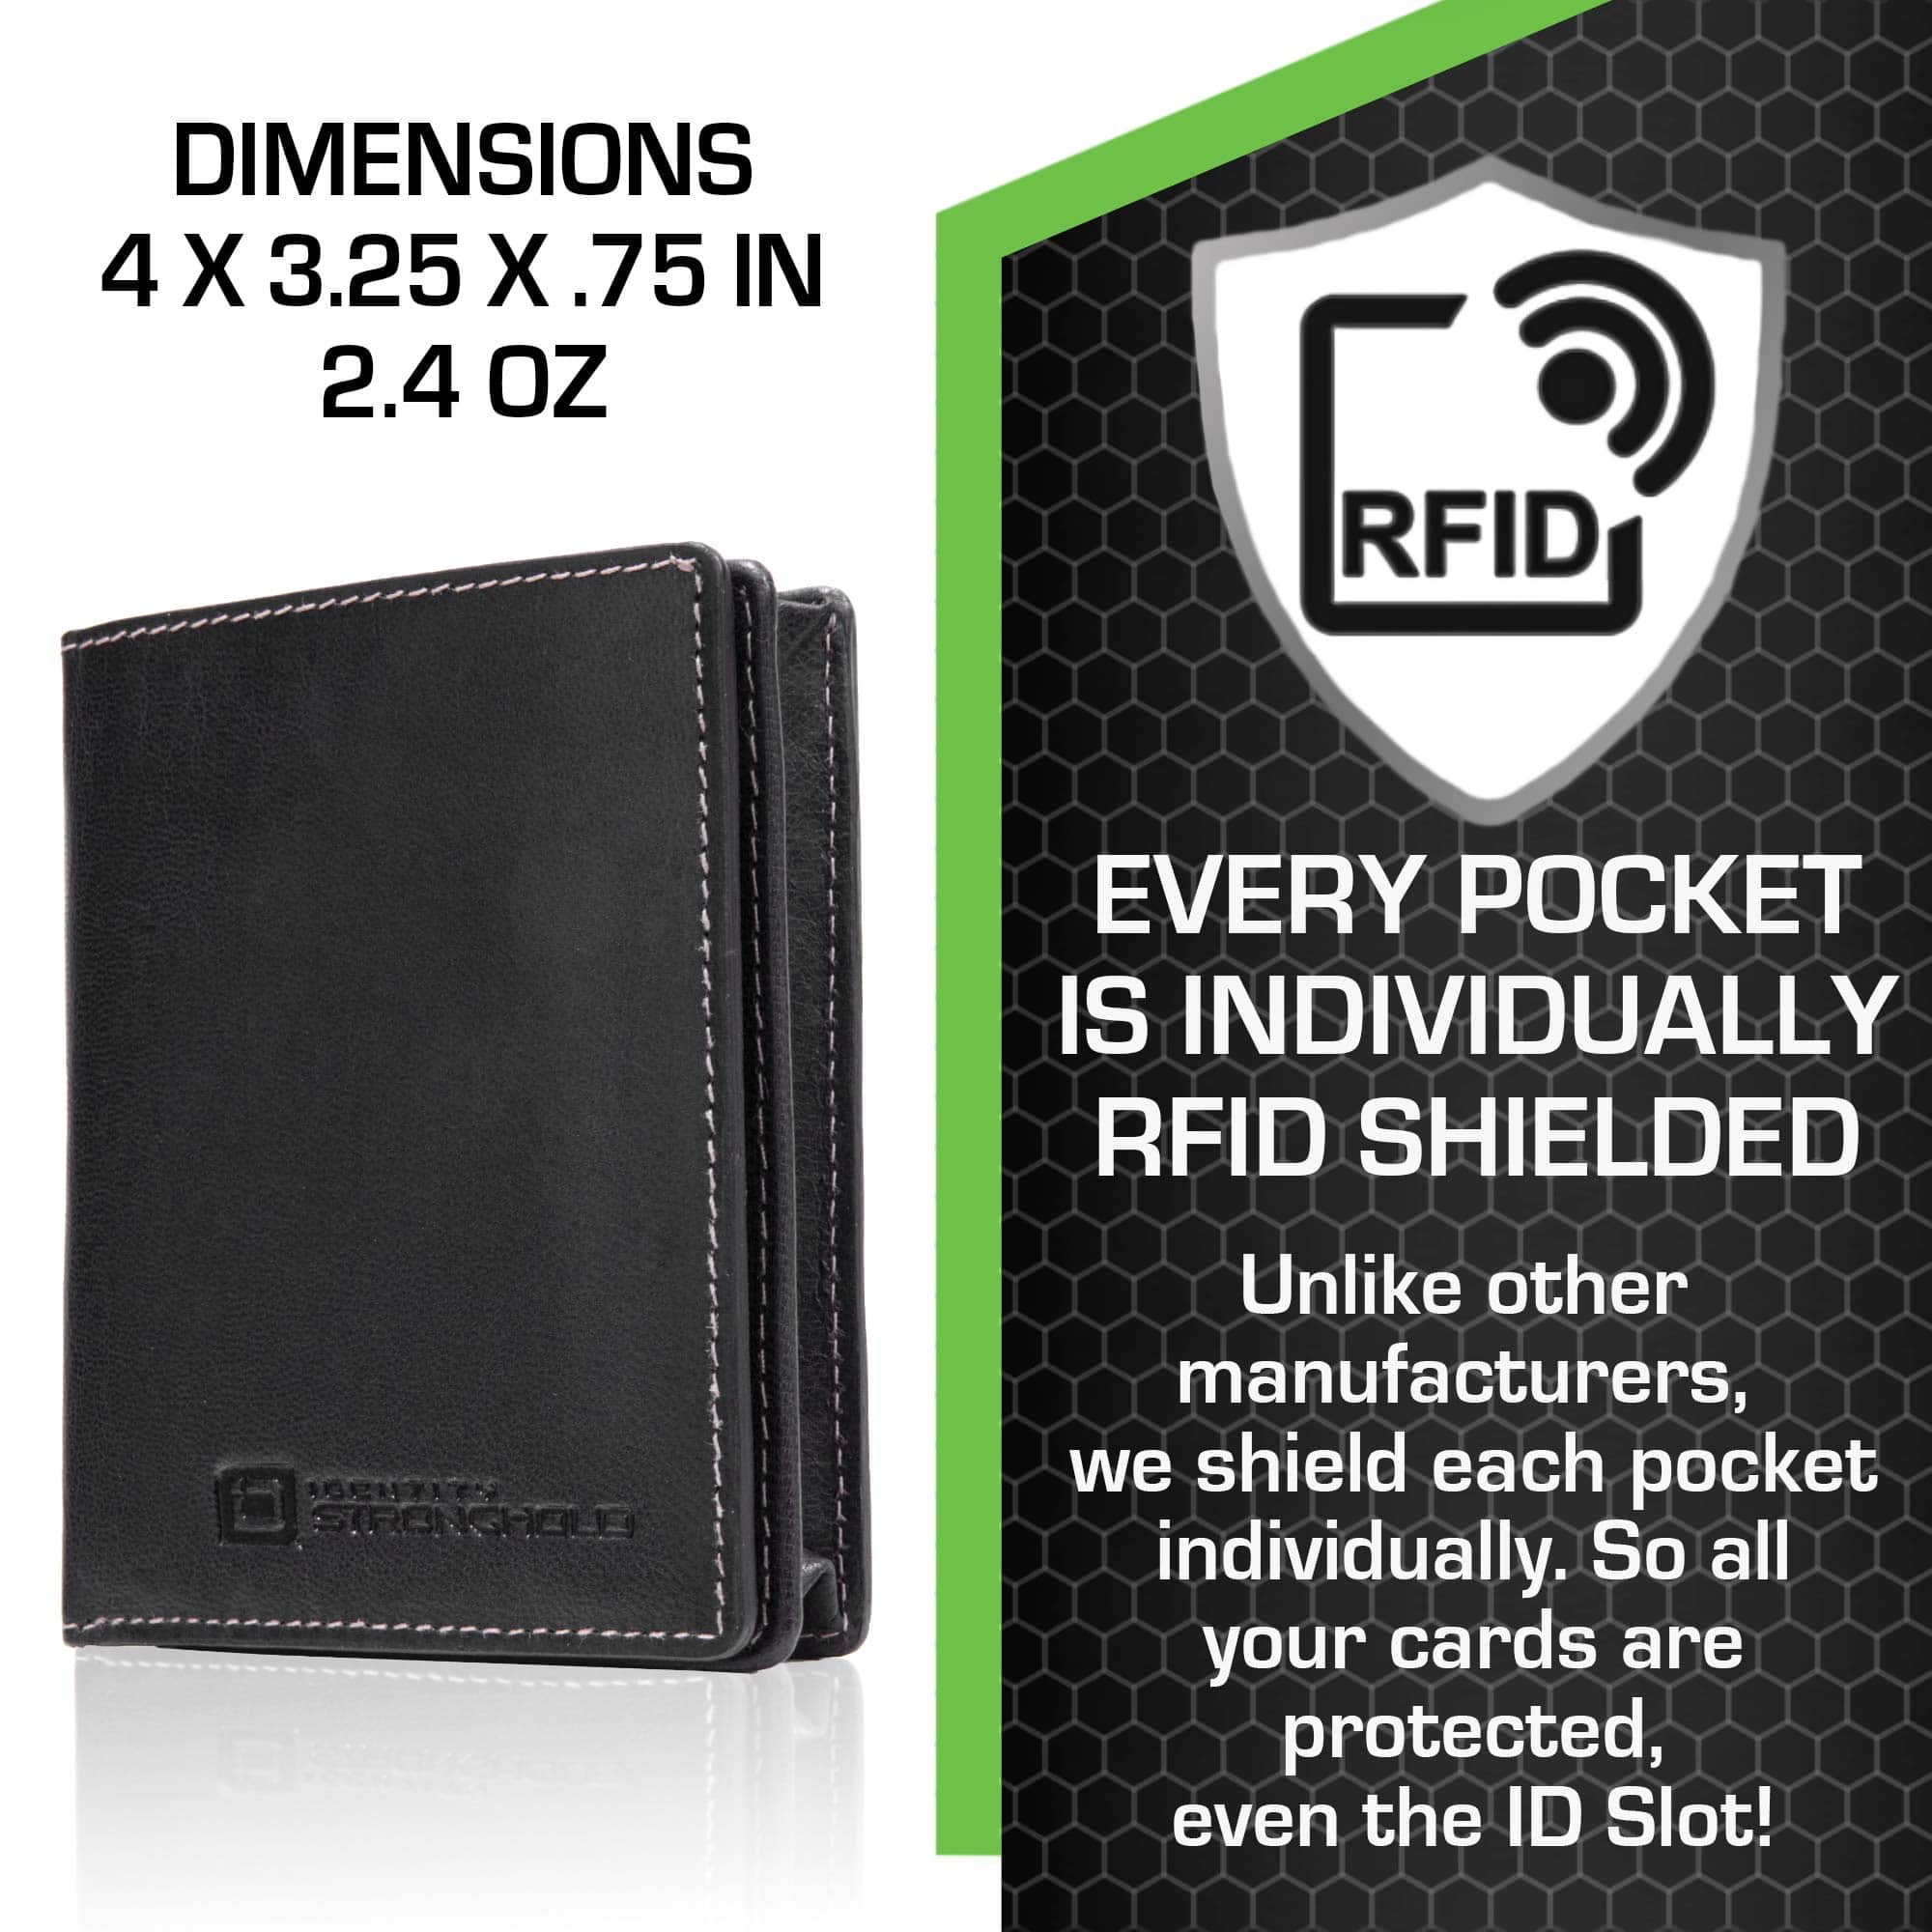 ID Stronghold Men's Wallet Mini Ladies The Waltlet - Maximum Storage RFID Secure Minimalist Wallet